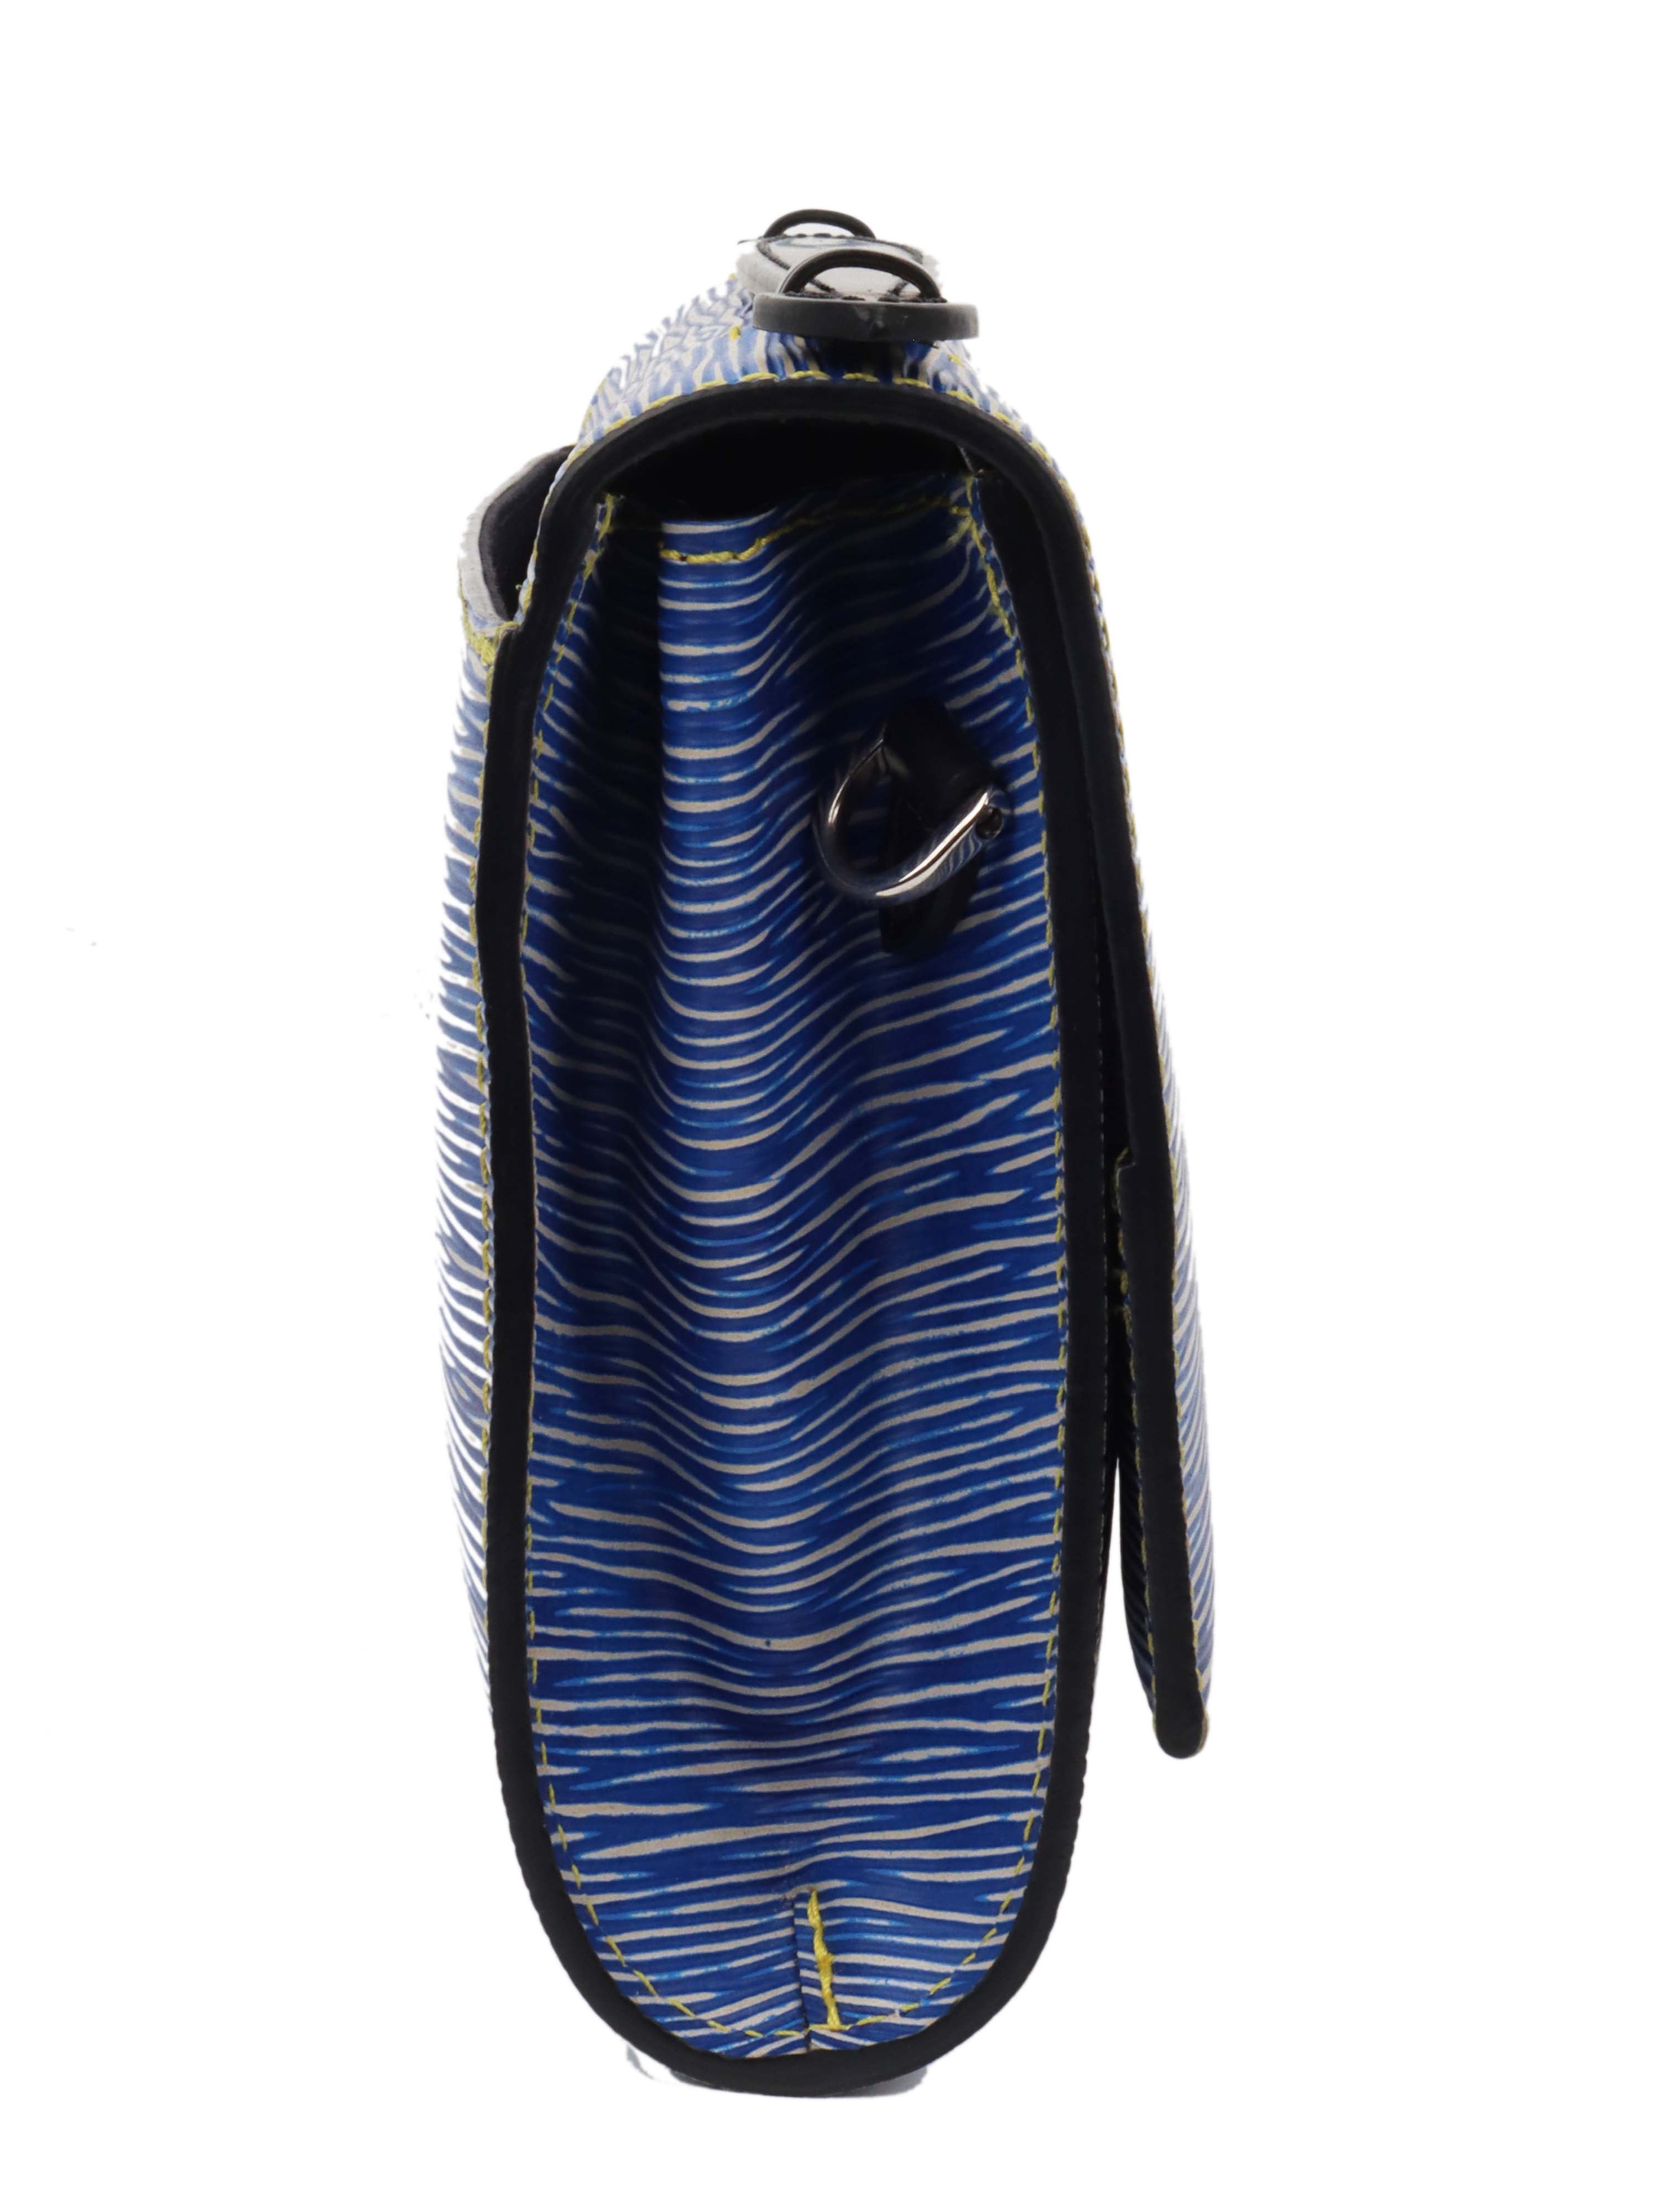 Louis Vuitton Clery Epi Denim Bag